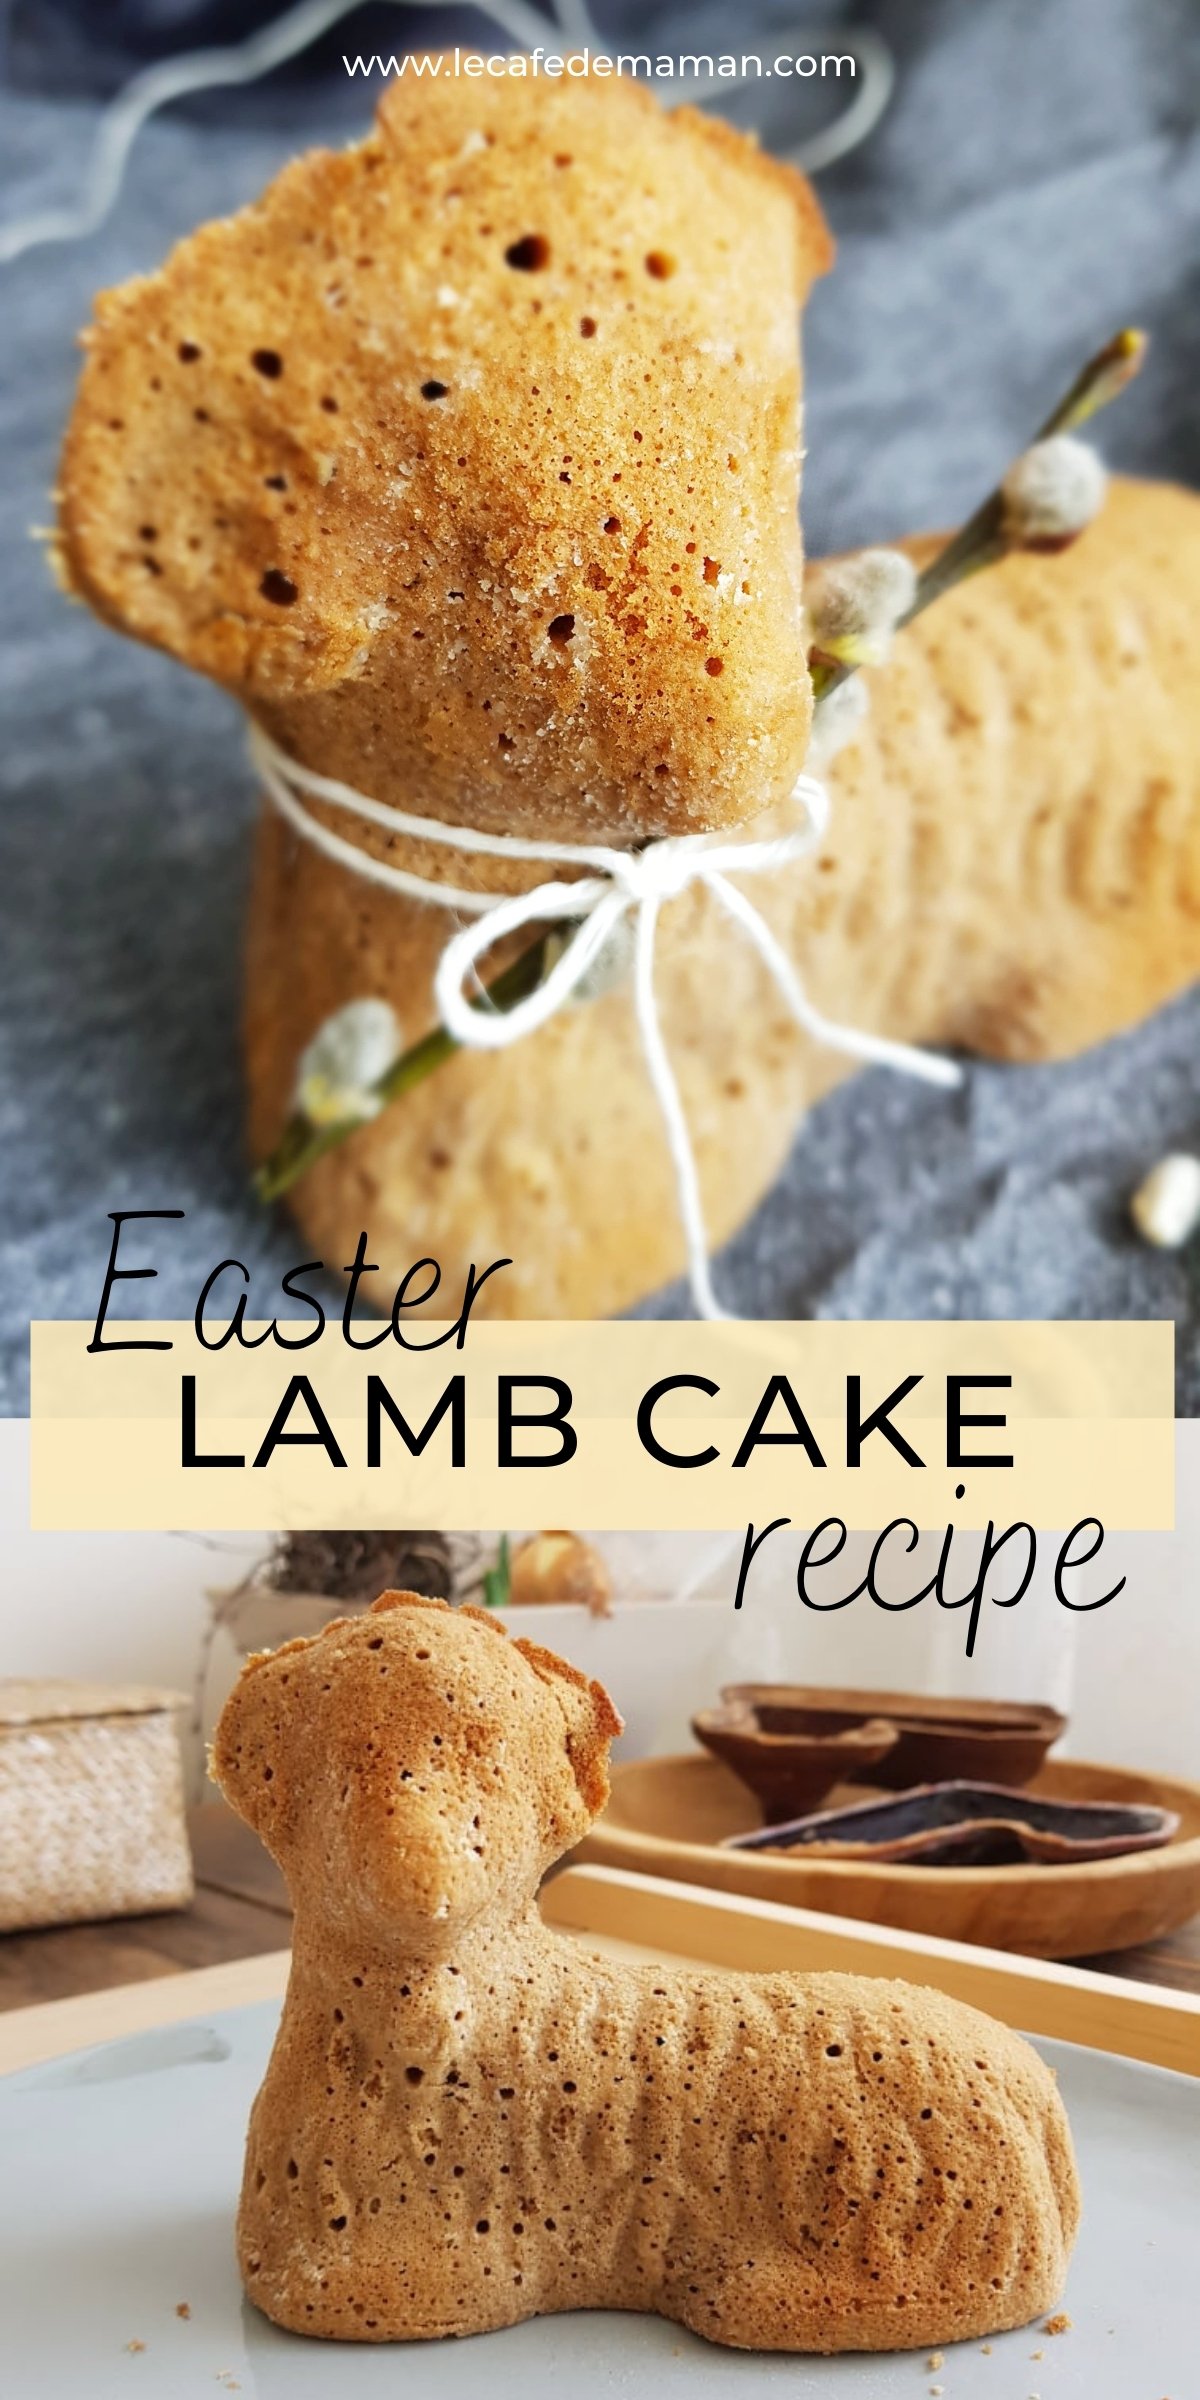 Easter cake recipe ideas